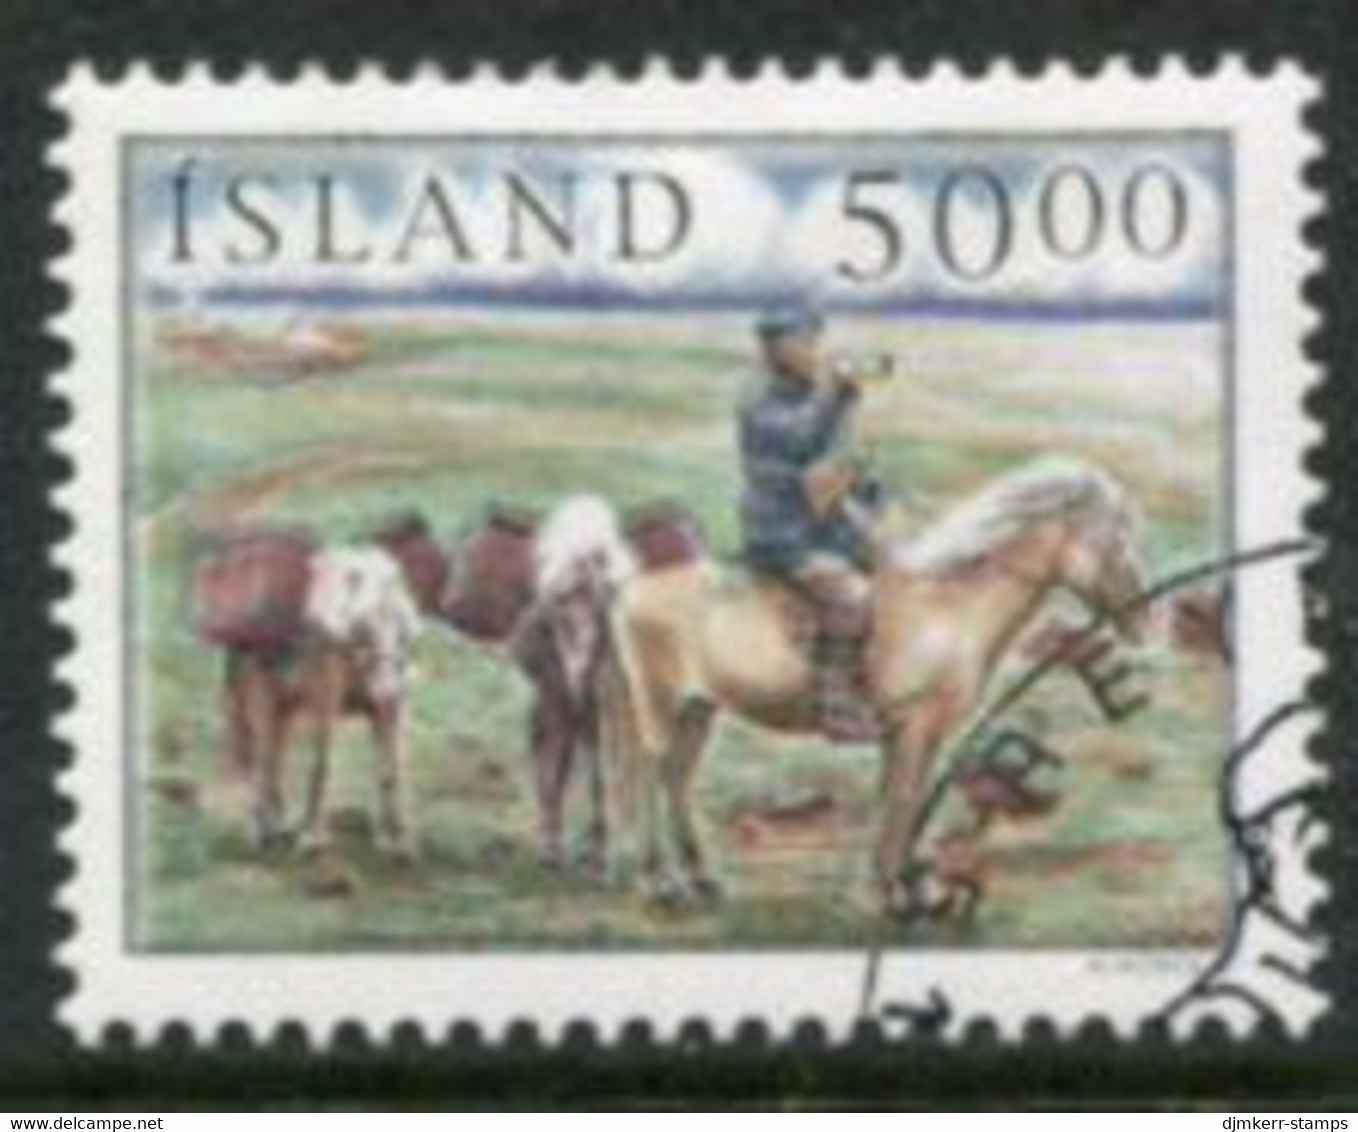 ICELAND 1997 Rural Postman Used.  Michel 880-81 - Usati